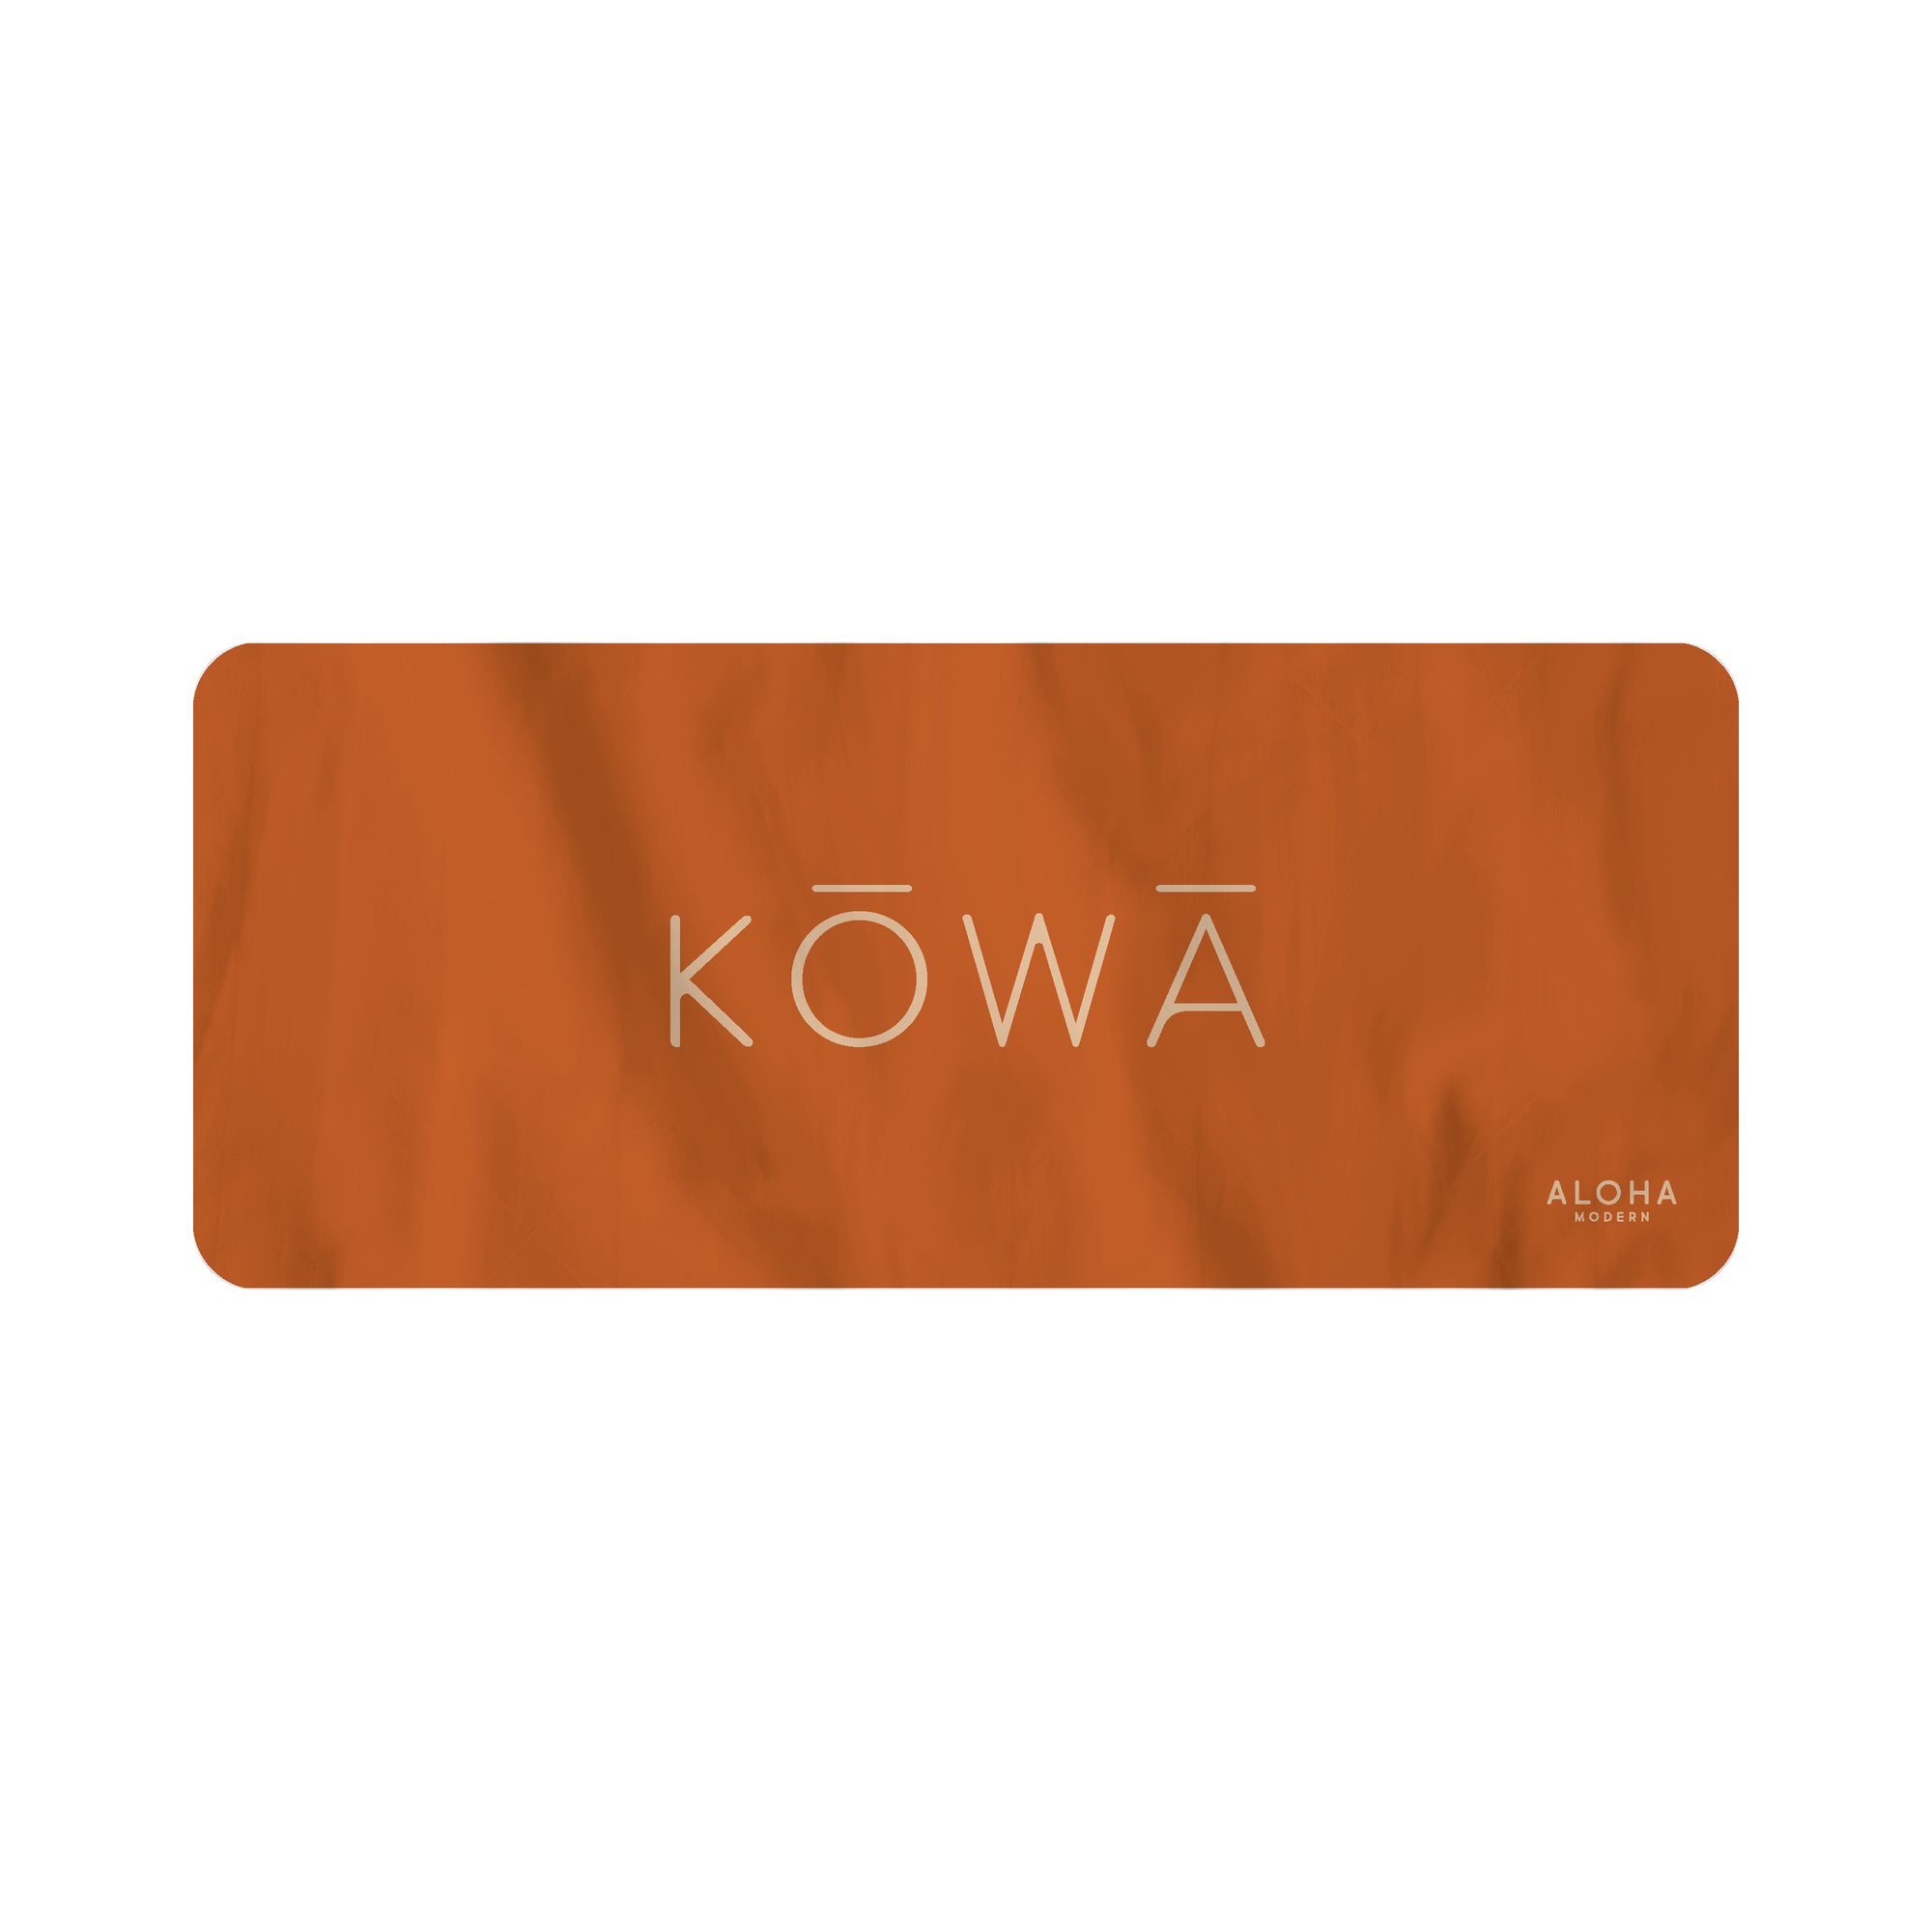 Pop-Up Mākeke - Aloha Modern - Kowa Microfiber Towel  - Back View